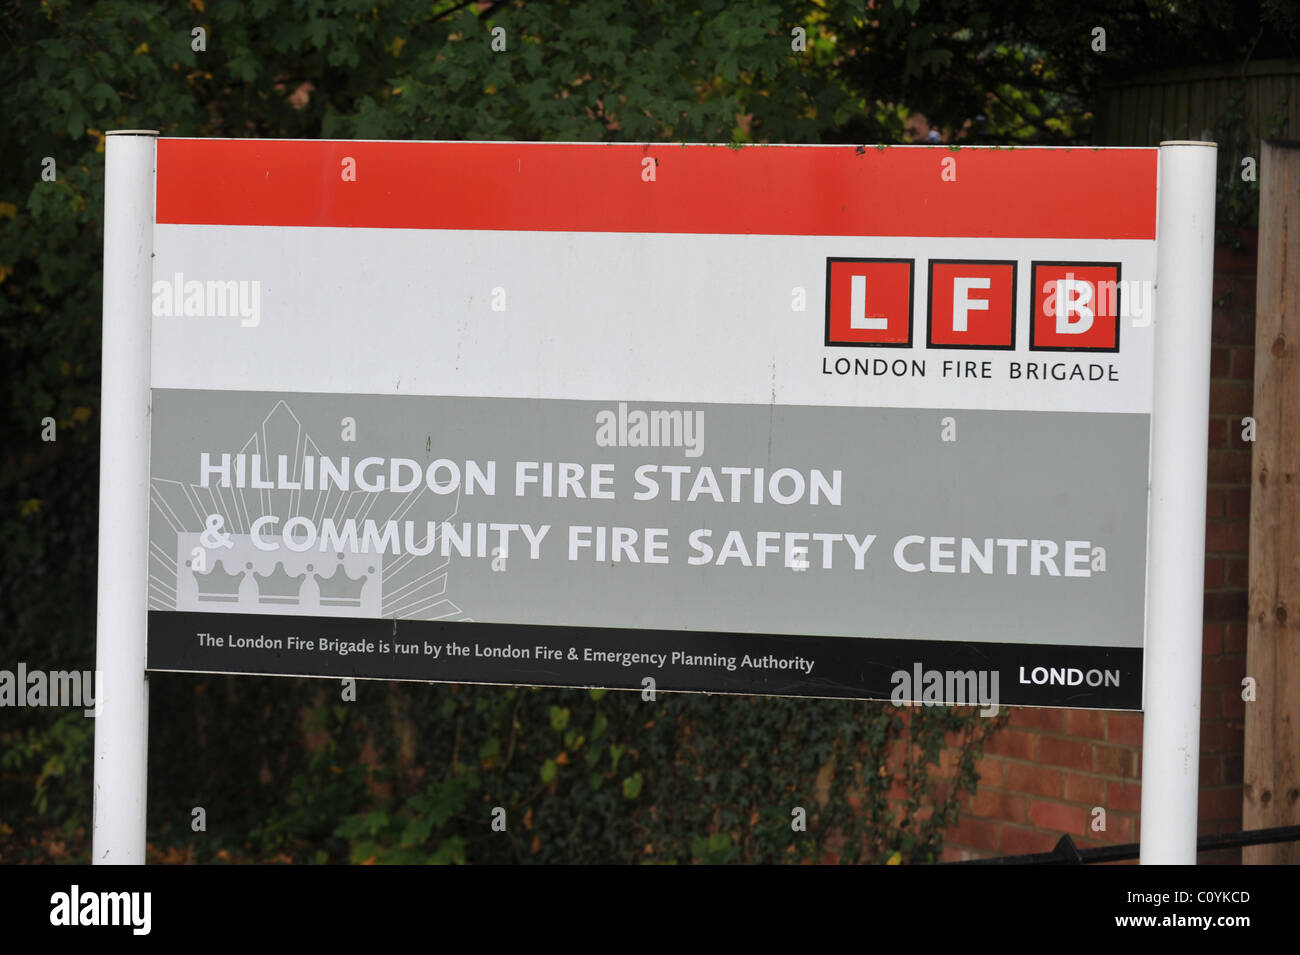 Hillingdon Fire Station & Community Fire Safety Center Banque D'Images